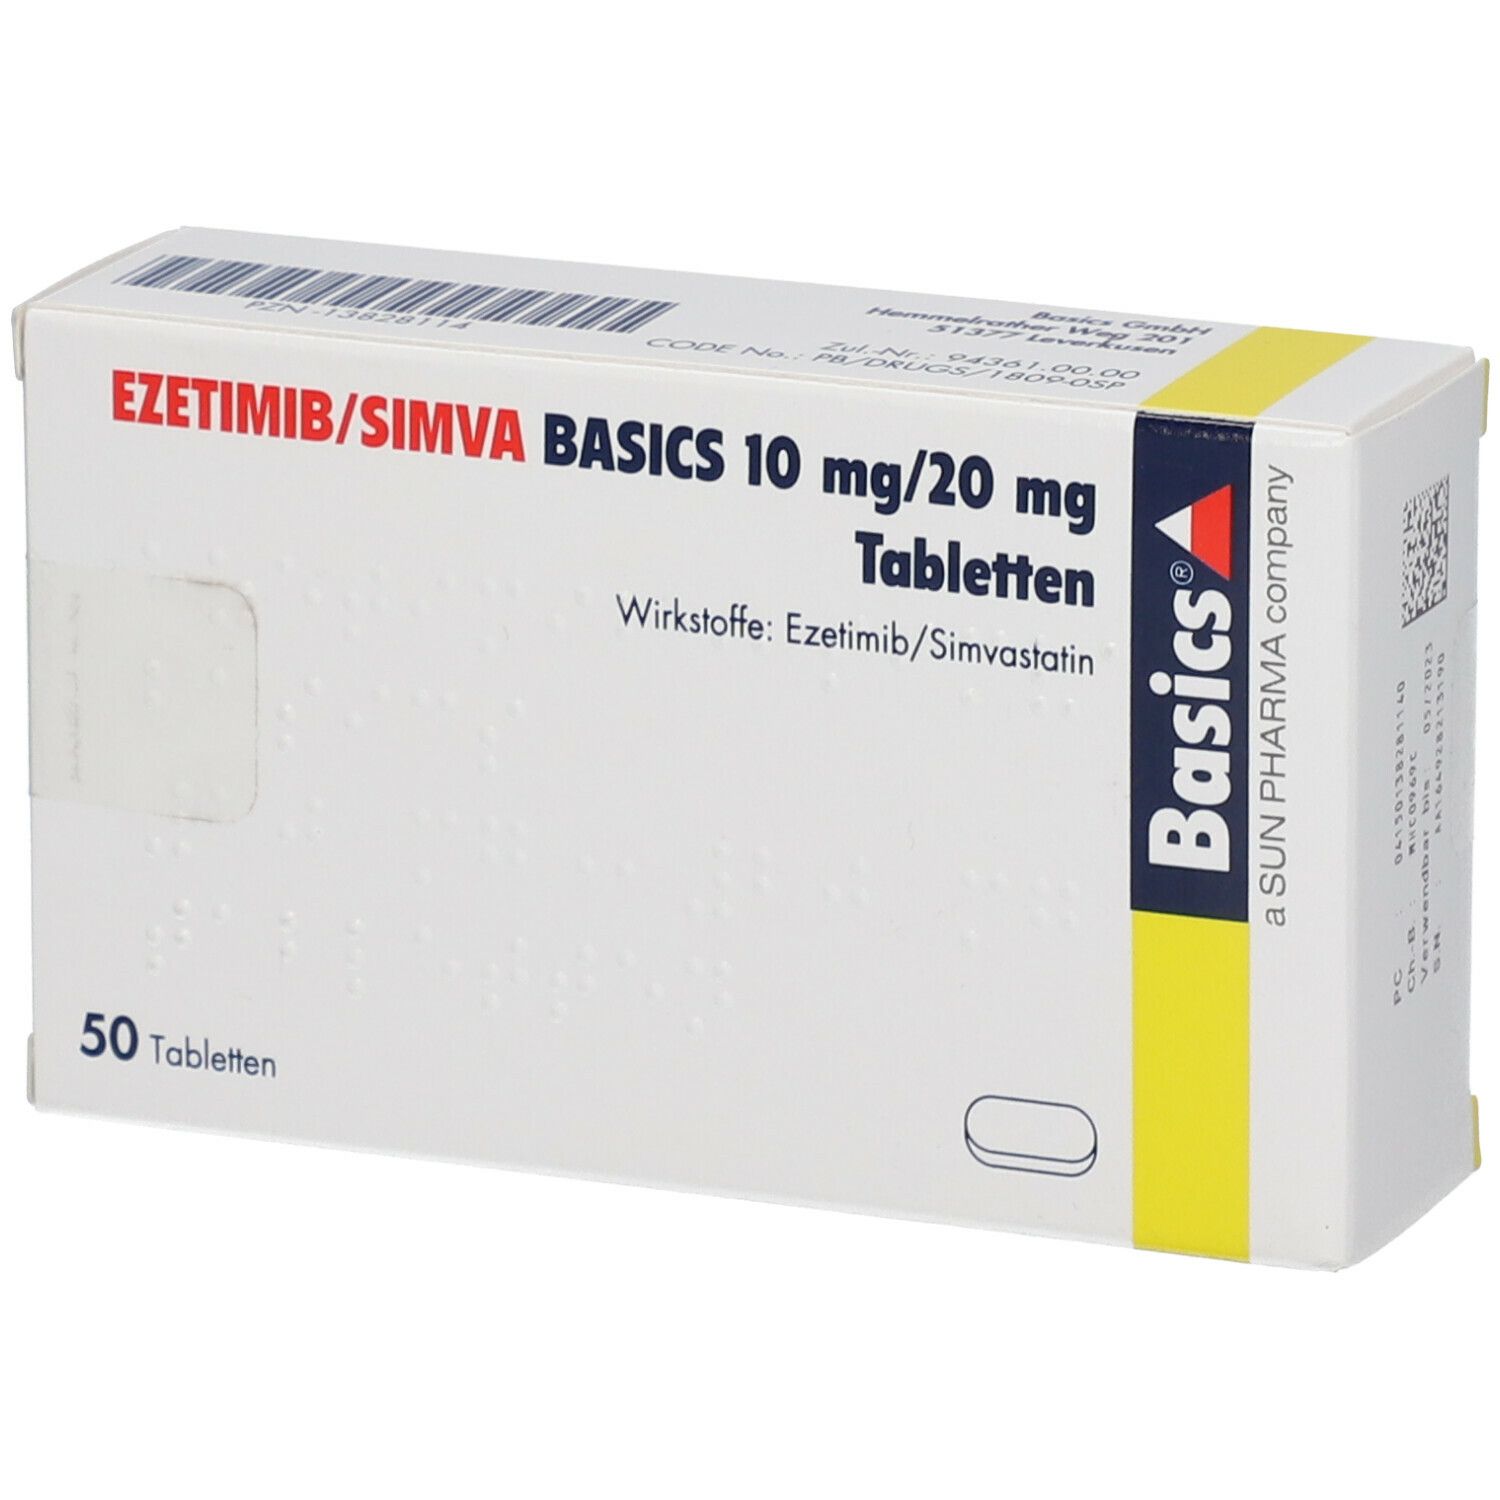 EZETIMIB/SIMVA BASICS 10 mg/20 mg